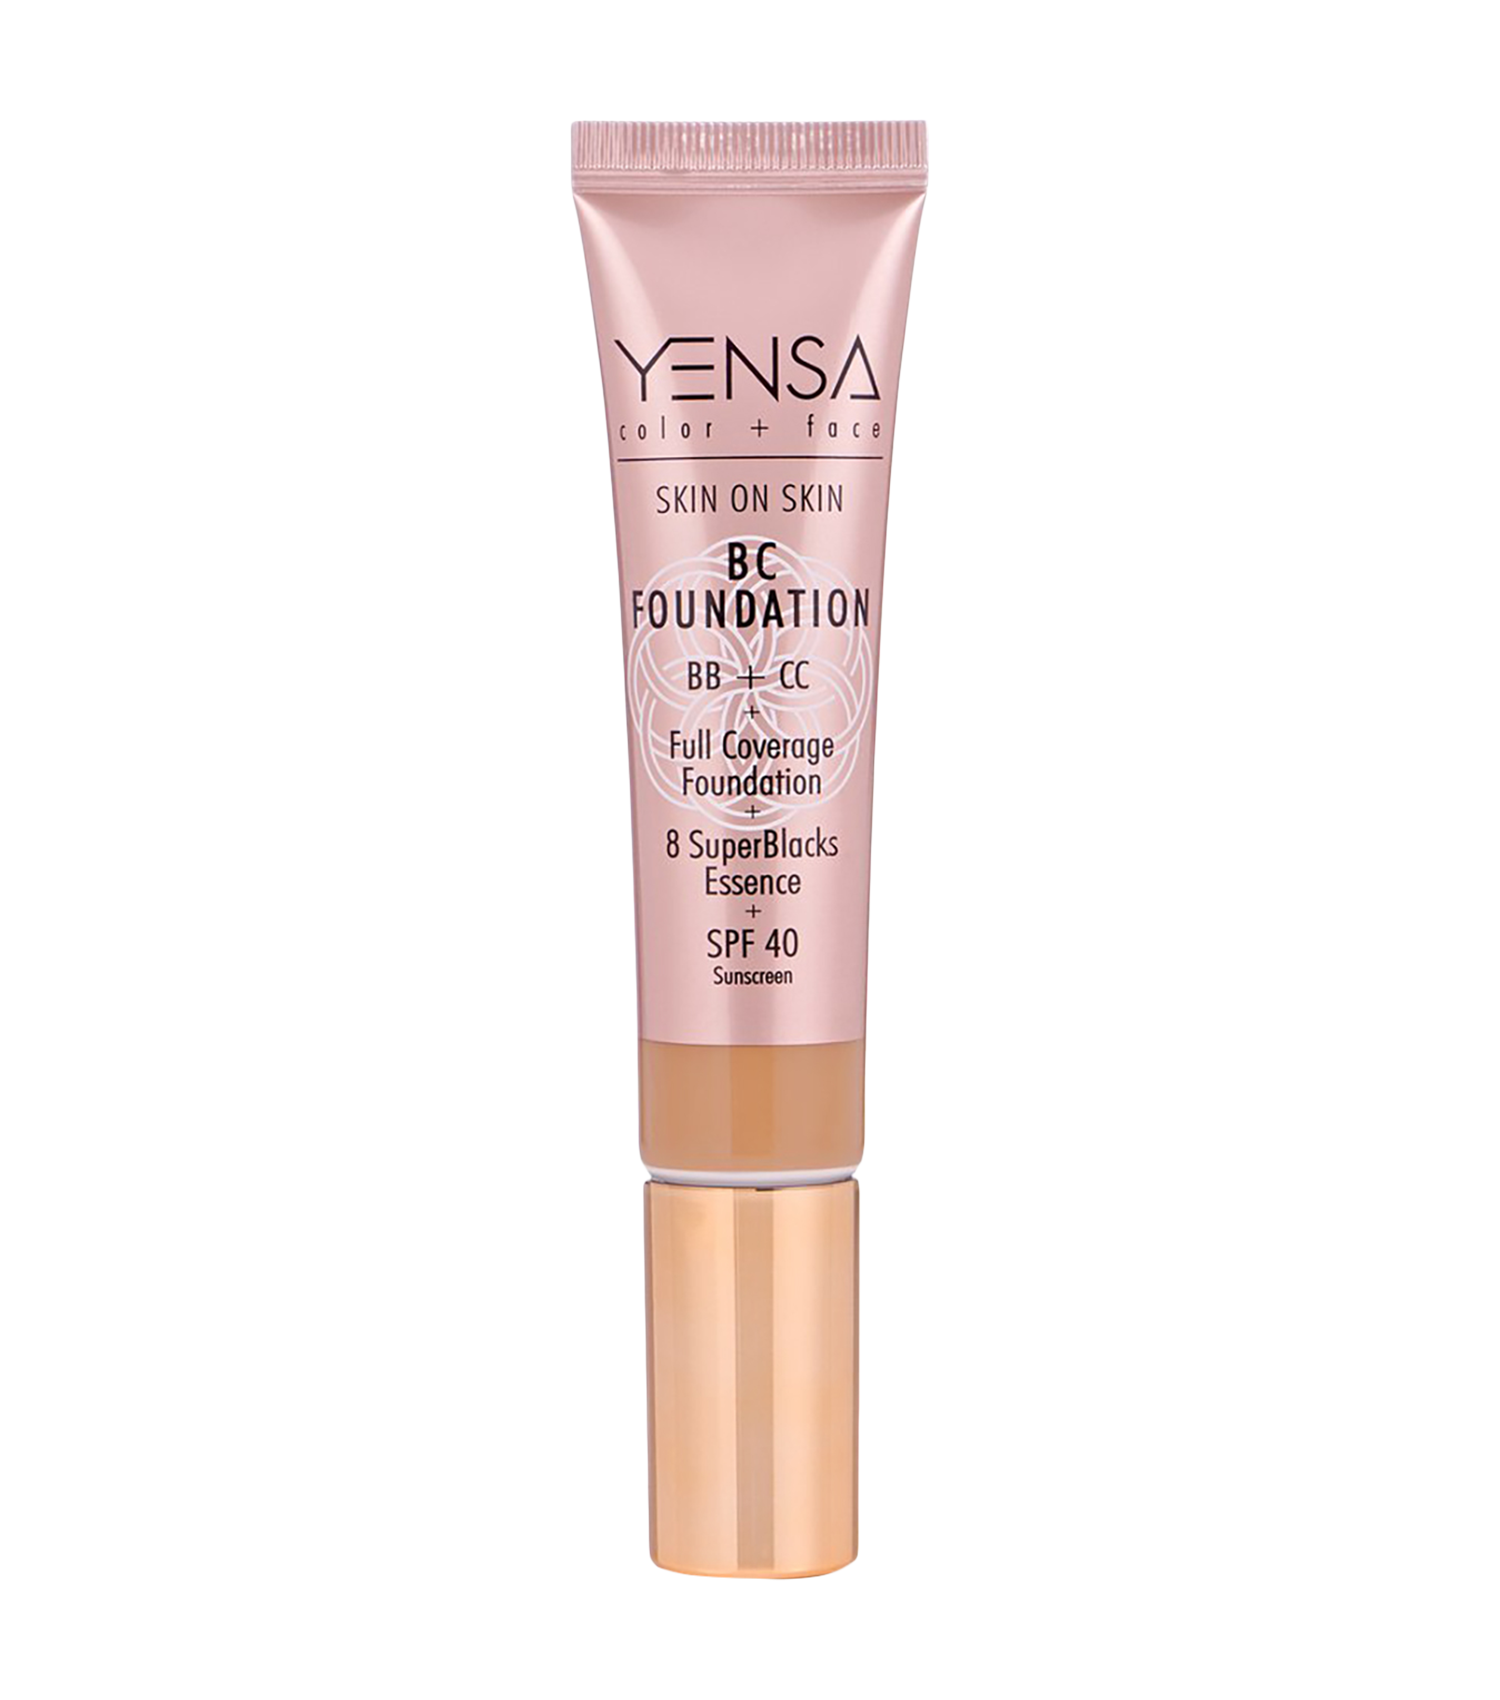 YENSA Beauty Skin on Skin BC Foundation SPF 40